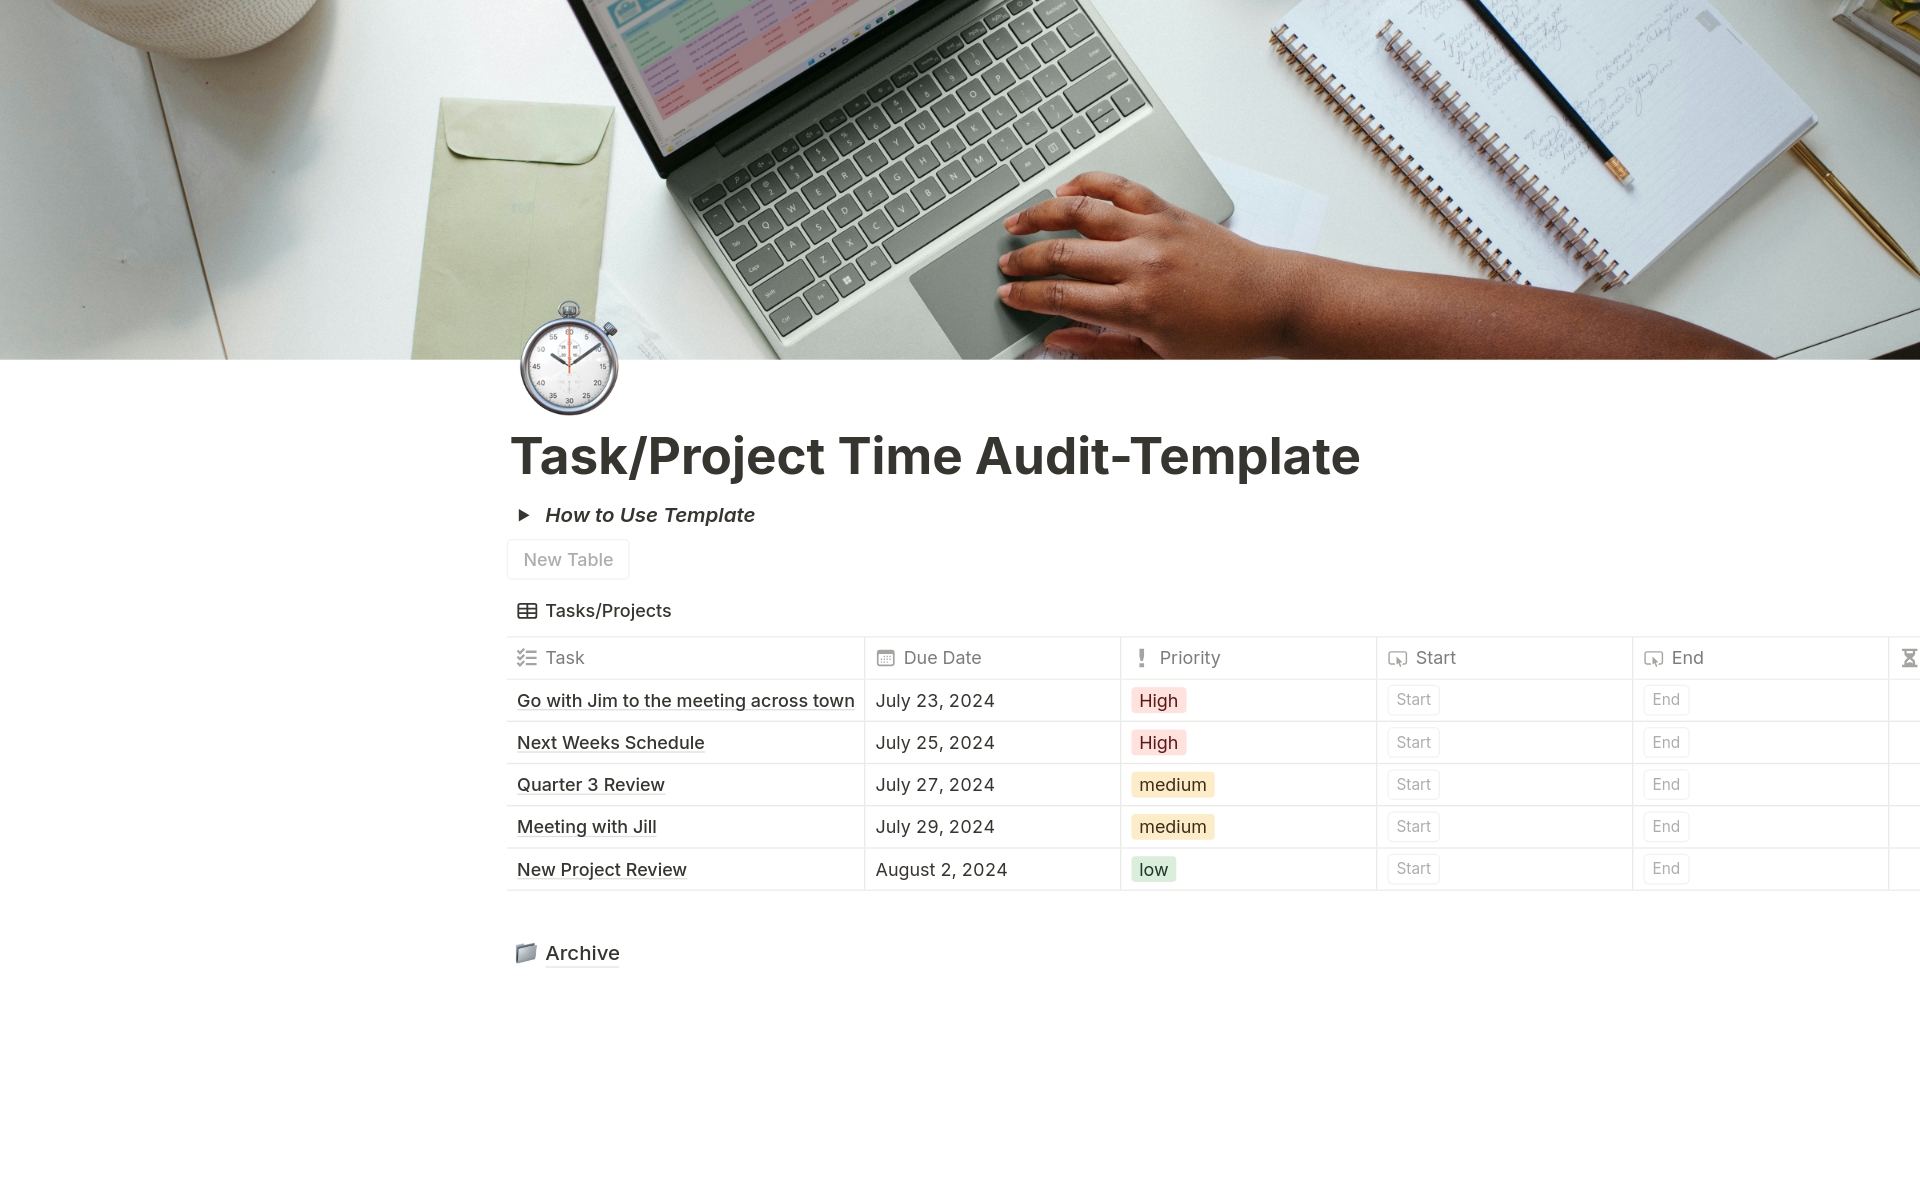 Task/Project Time Audit님의 템플릿 미리보기